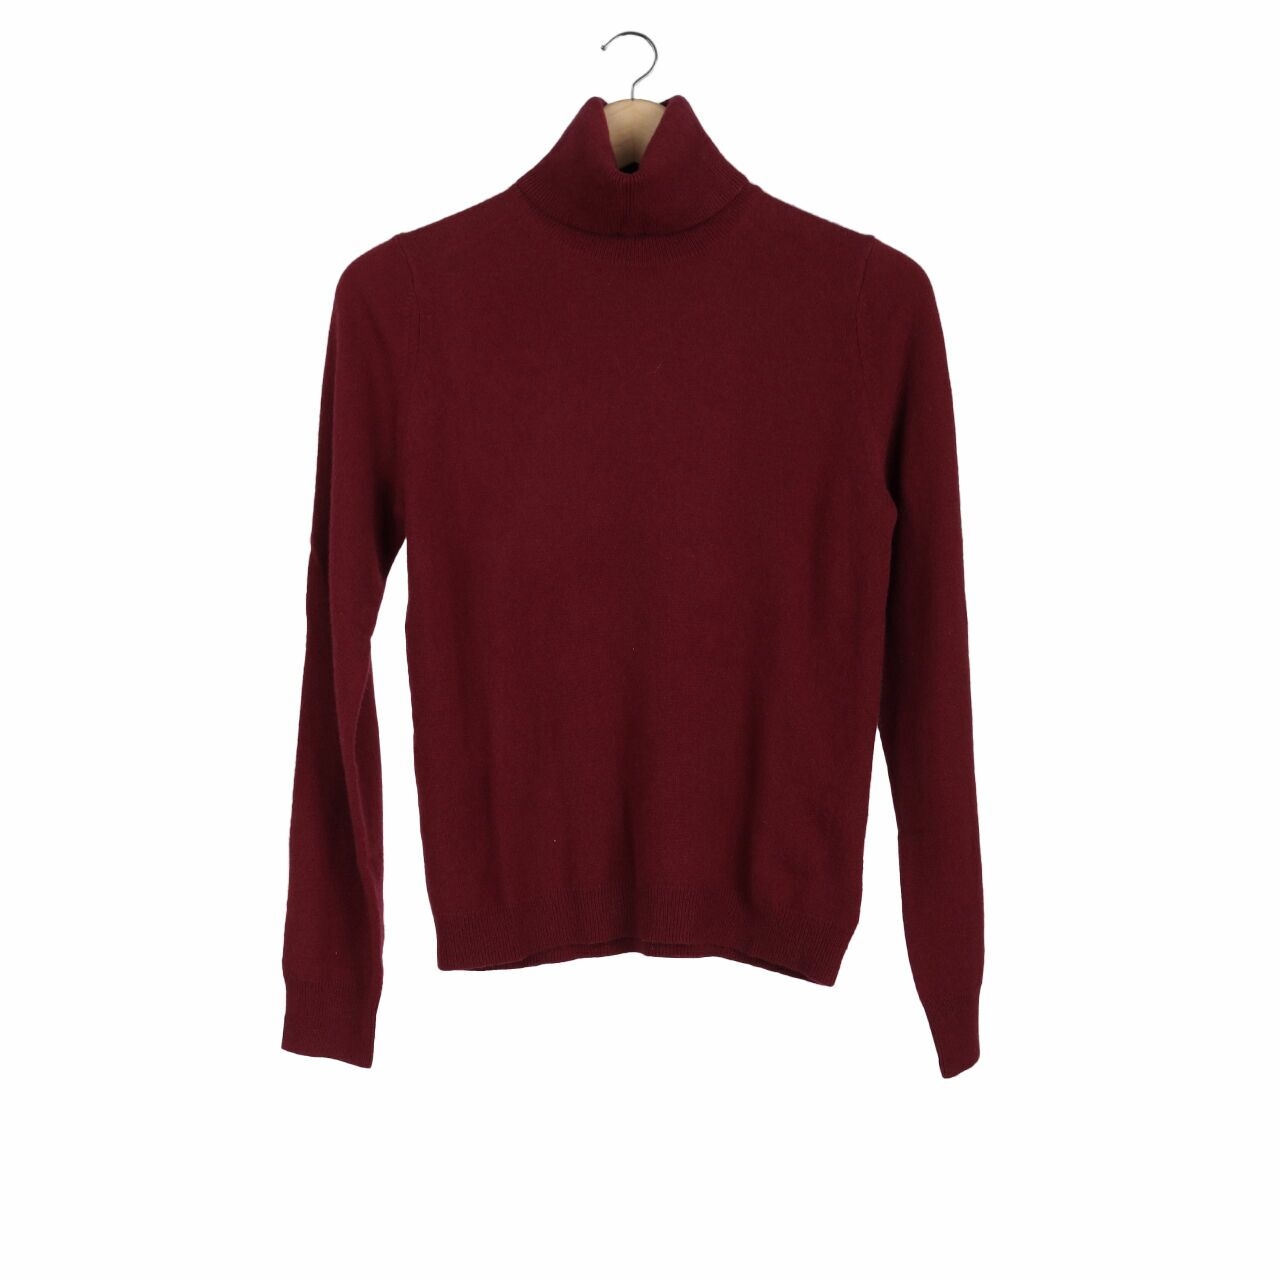 UNIQLO Maroon Sweater